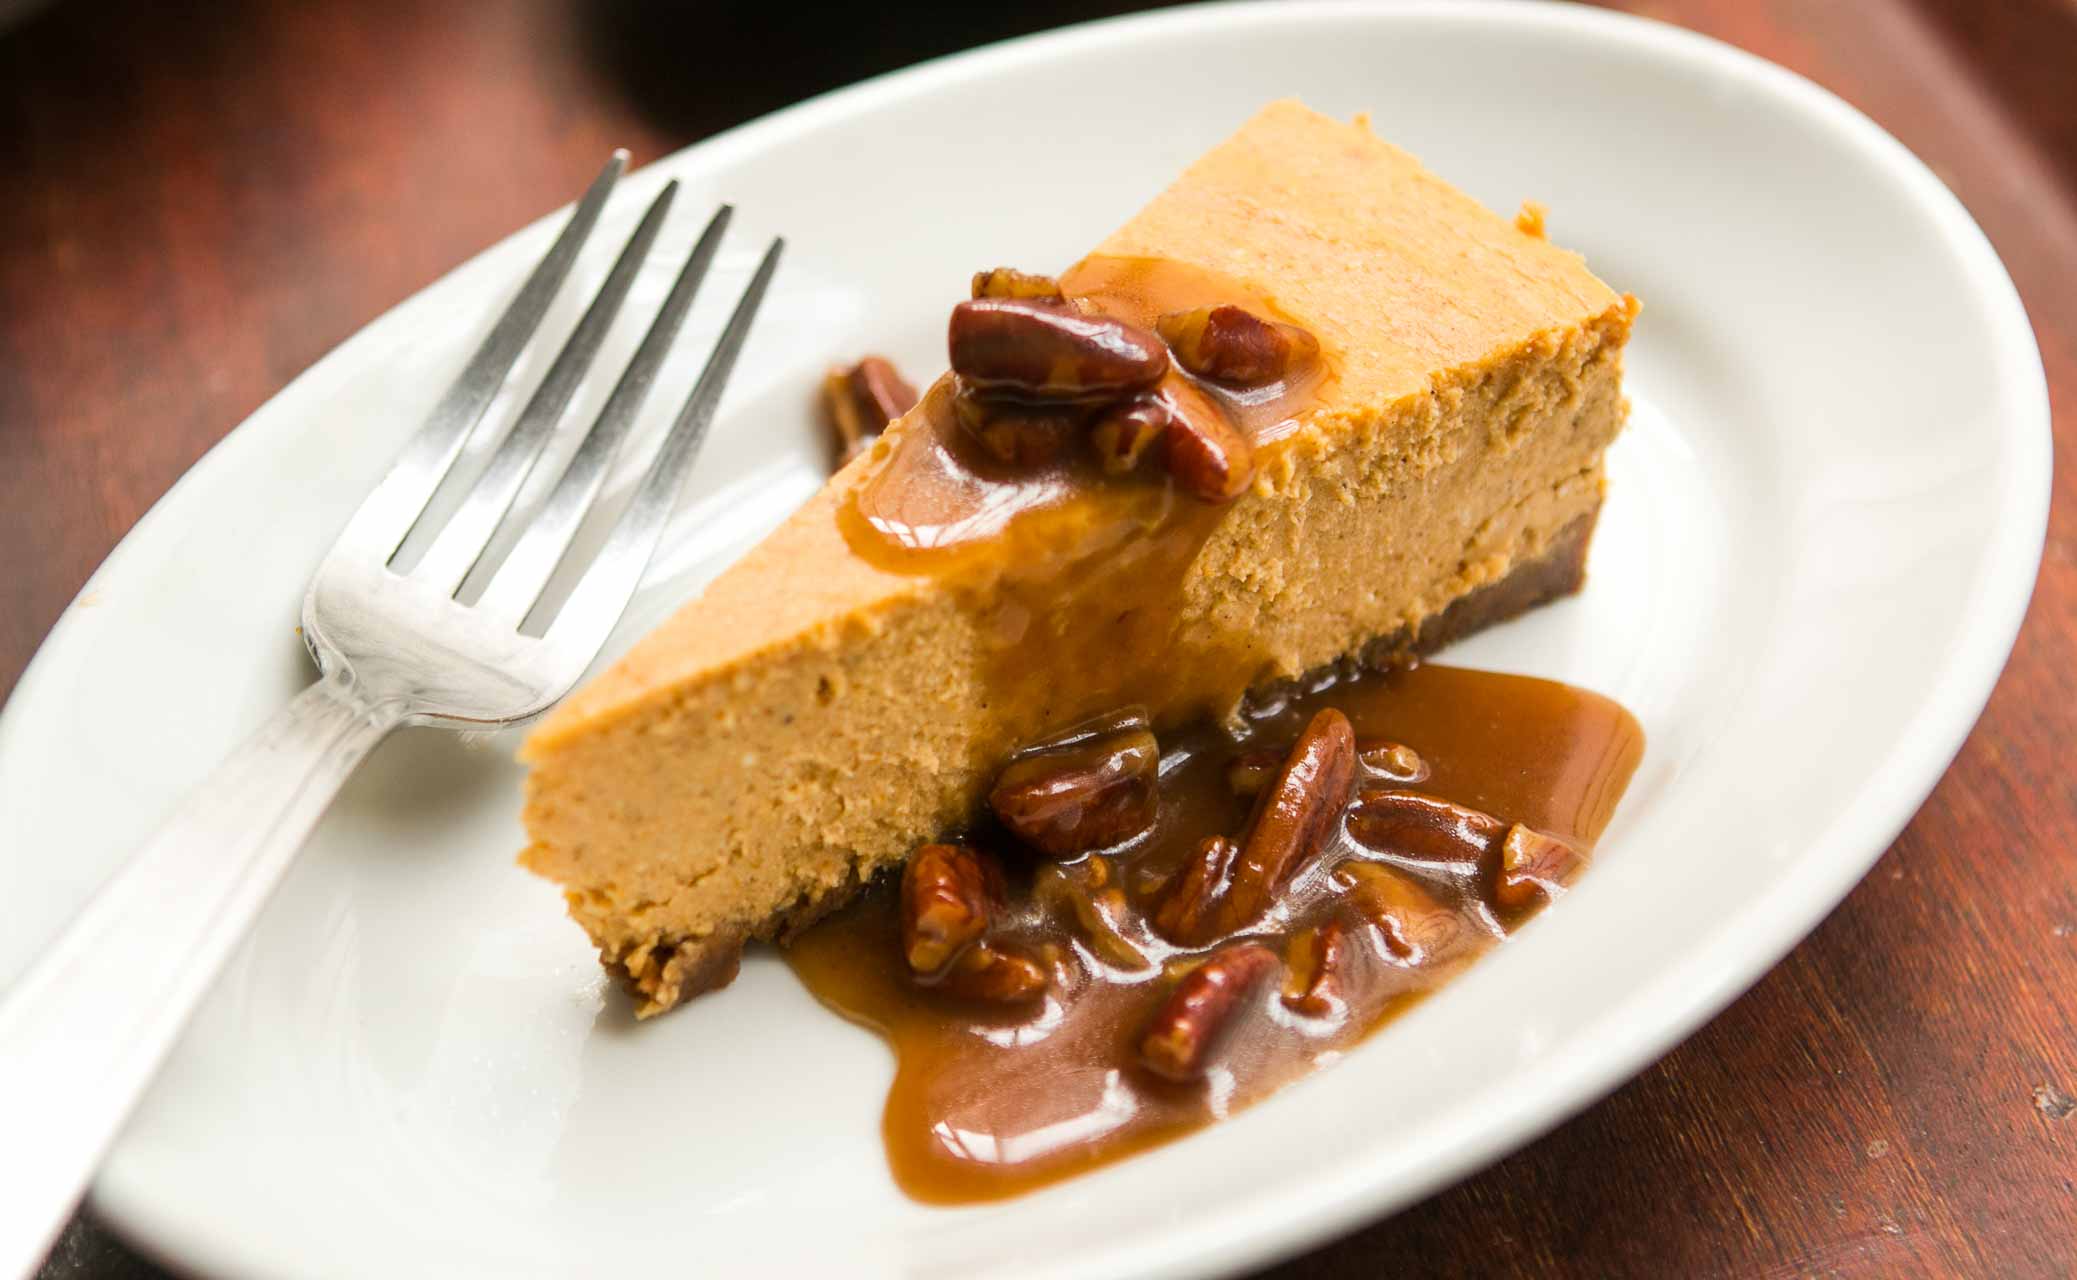 https://www.davidlebovitz.com/wp-content/uploads/2017/10/Pumpkin-cheesecake-recipe-with-toffee-pecan-sauce_-7.jpg